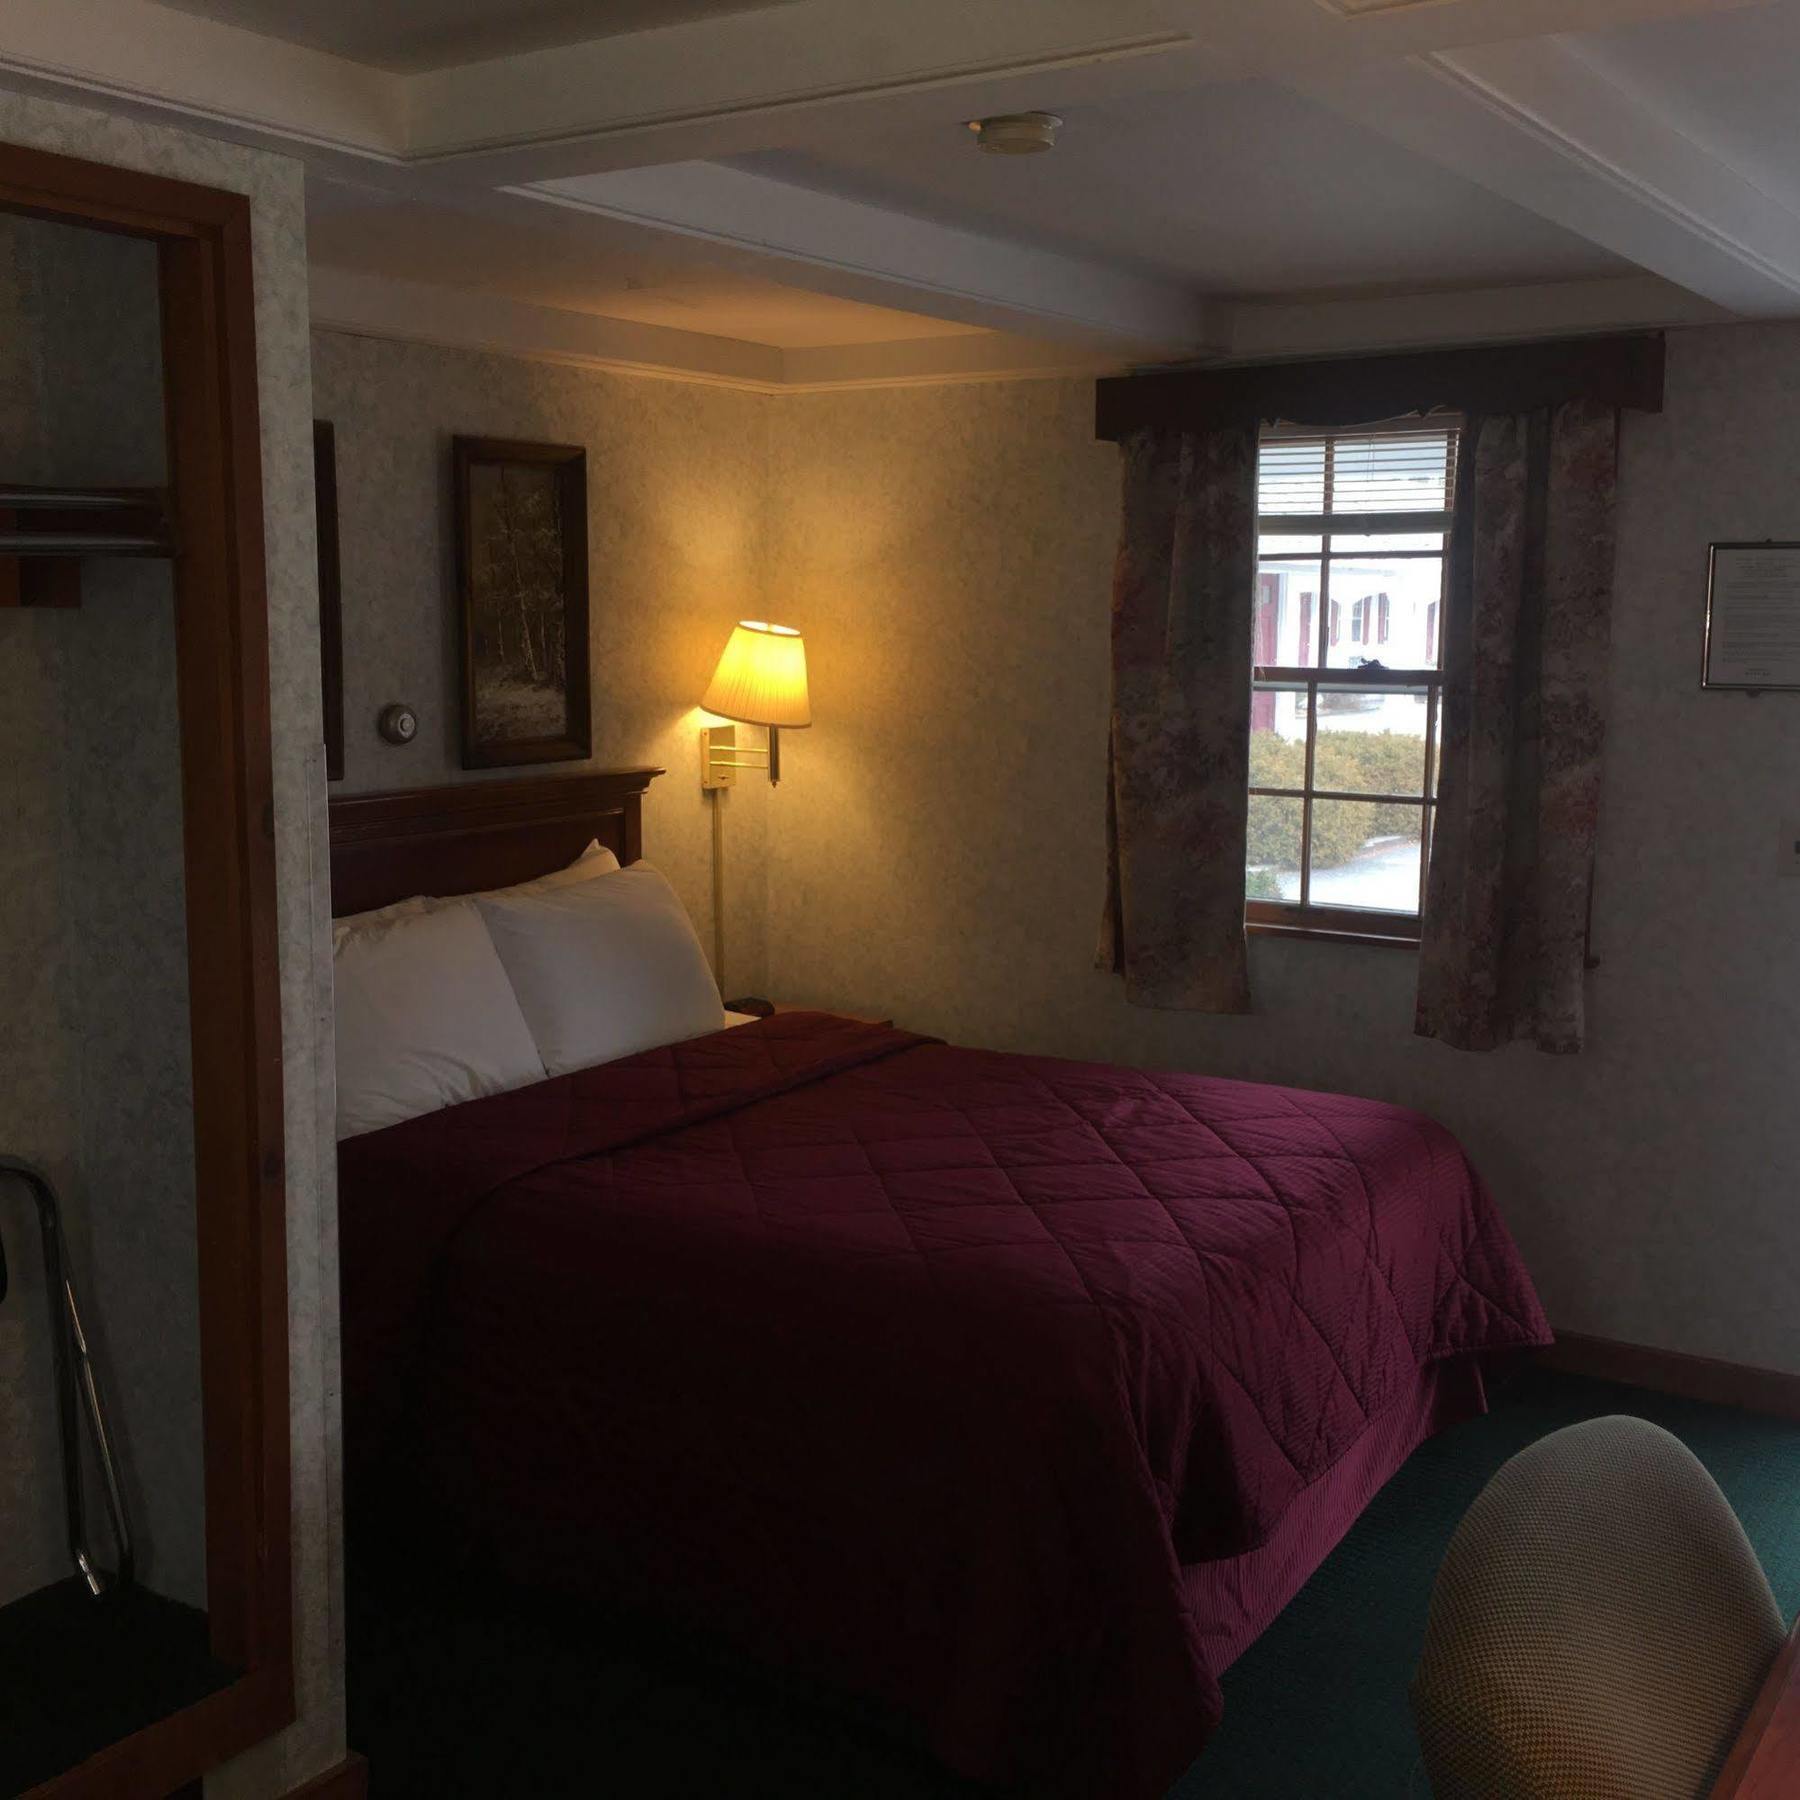 Stonybrook Motel & Lodge Franconia Exterior photo